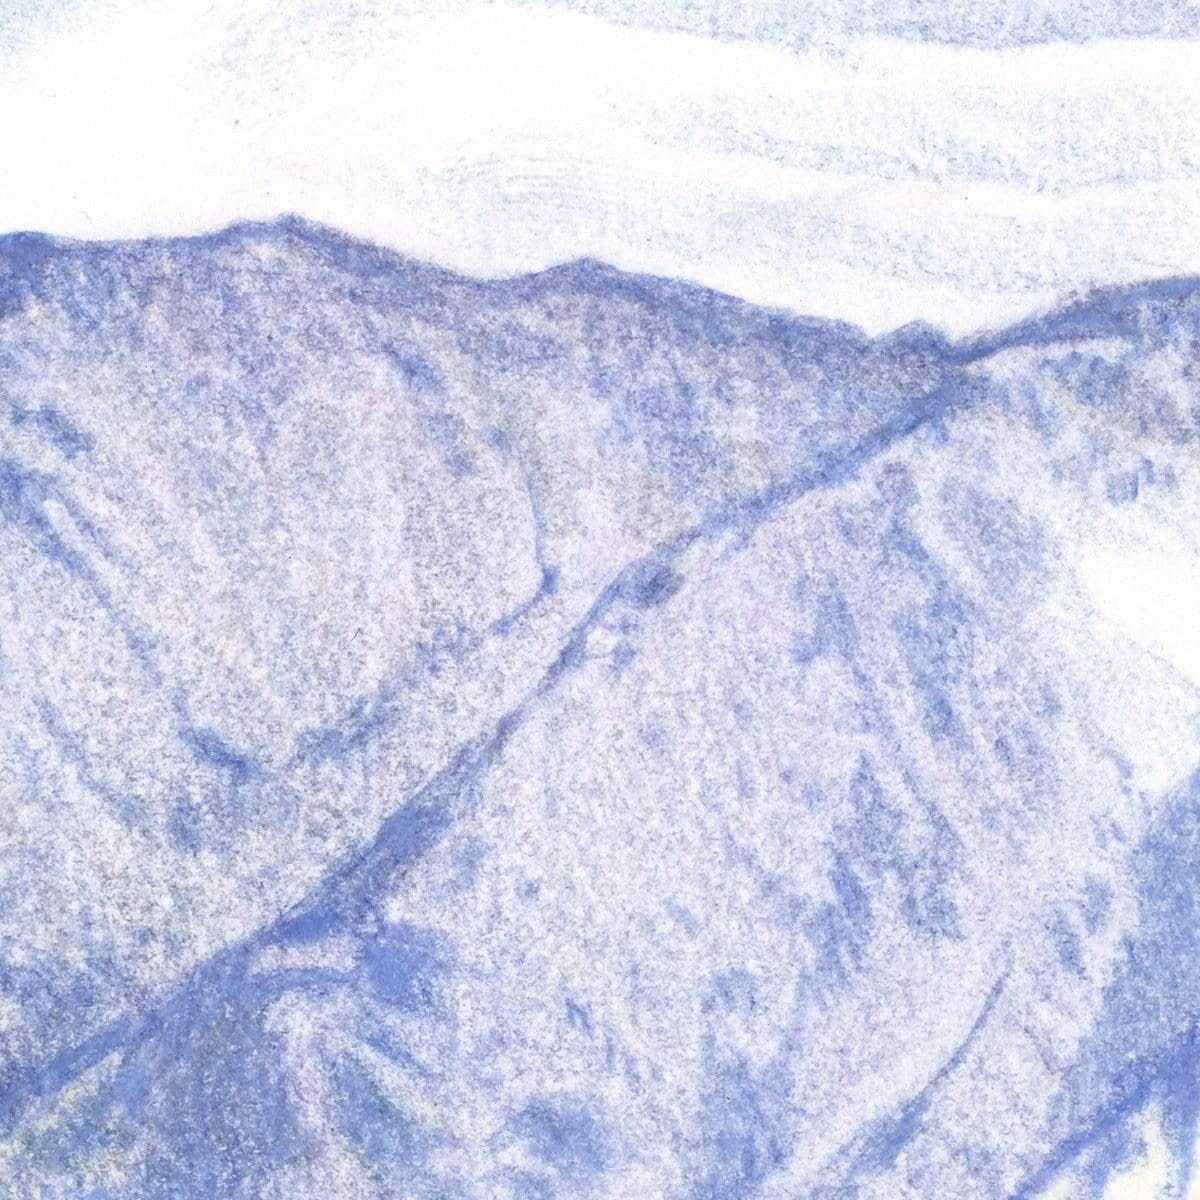 Fairholme Range Banff - Art Print | Artwork by Glen Loates